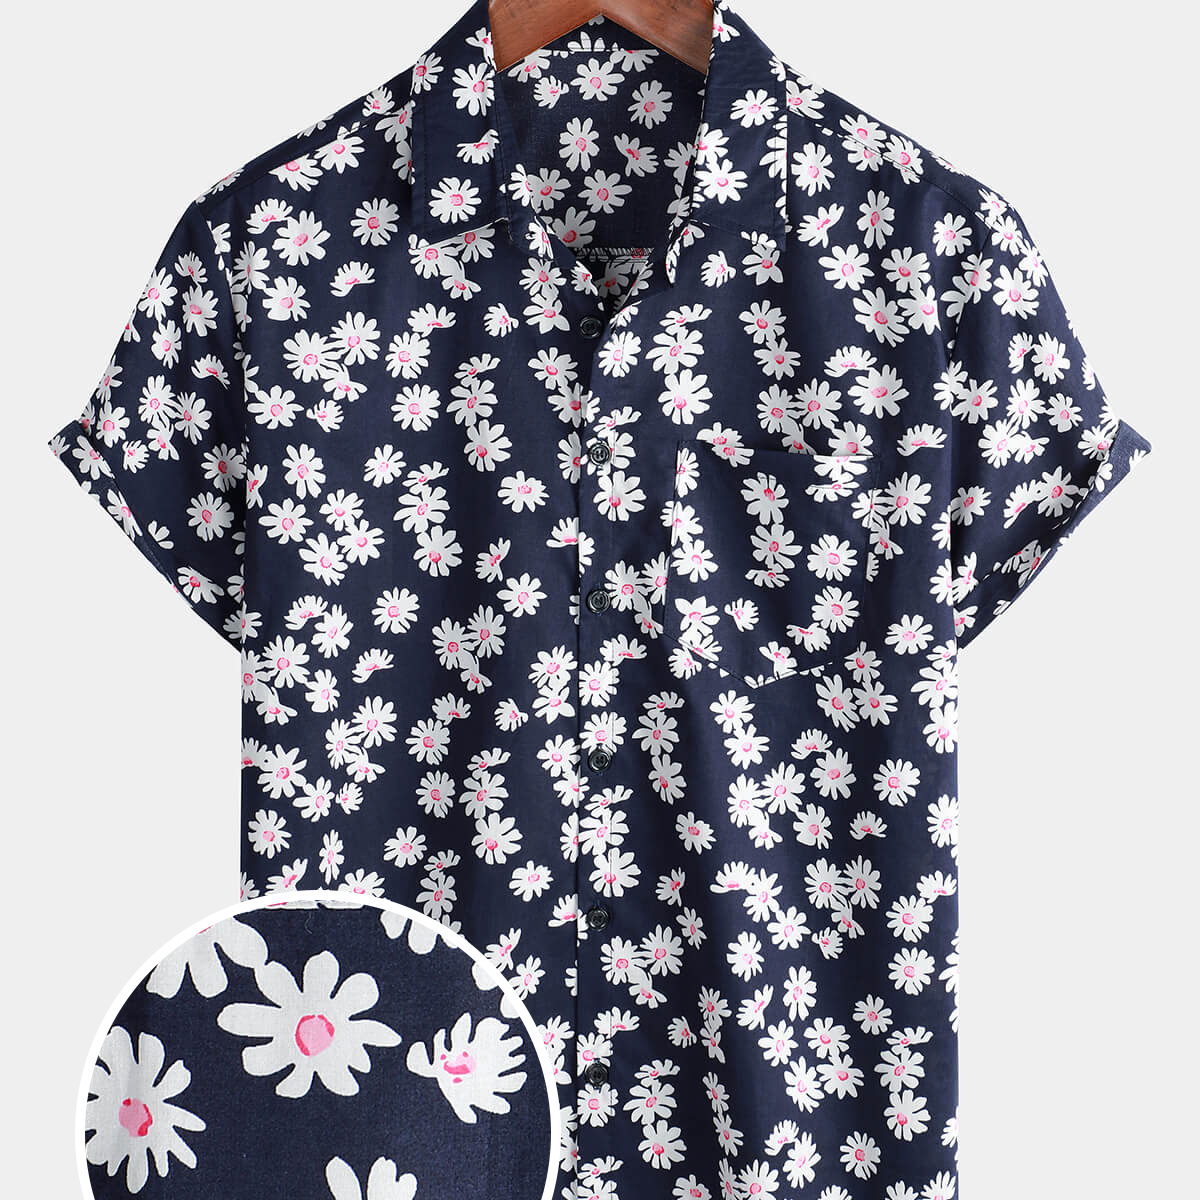 Men's Cotton Floral Daisy Button Up Short Sleeve Shirt